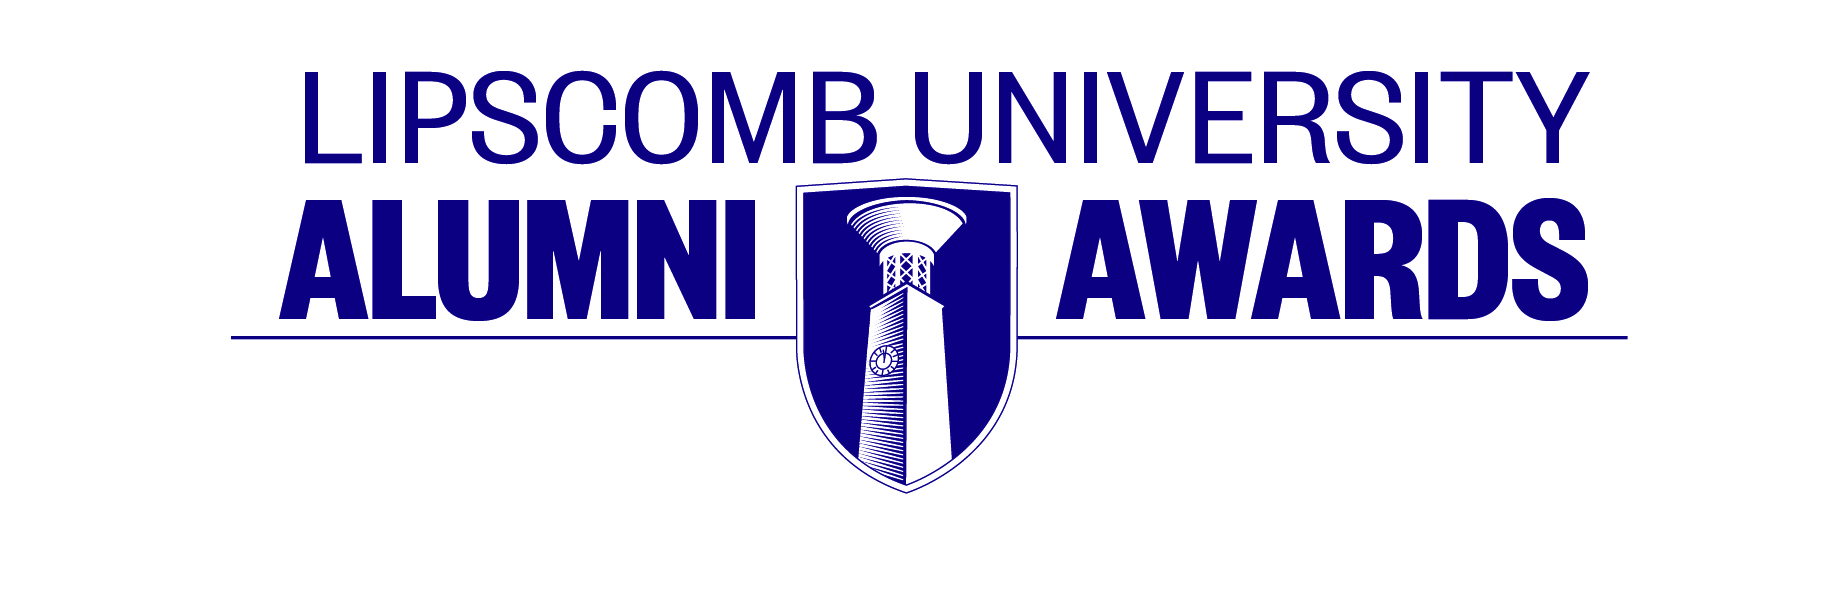 Alumni Award logo